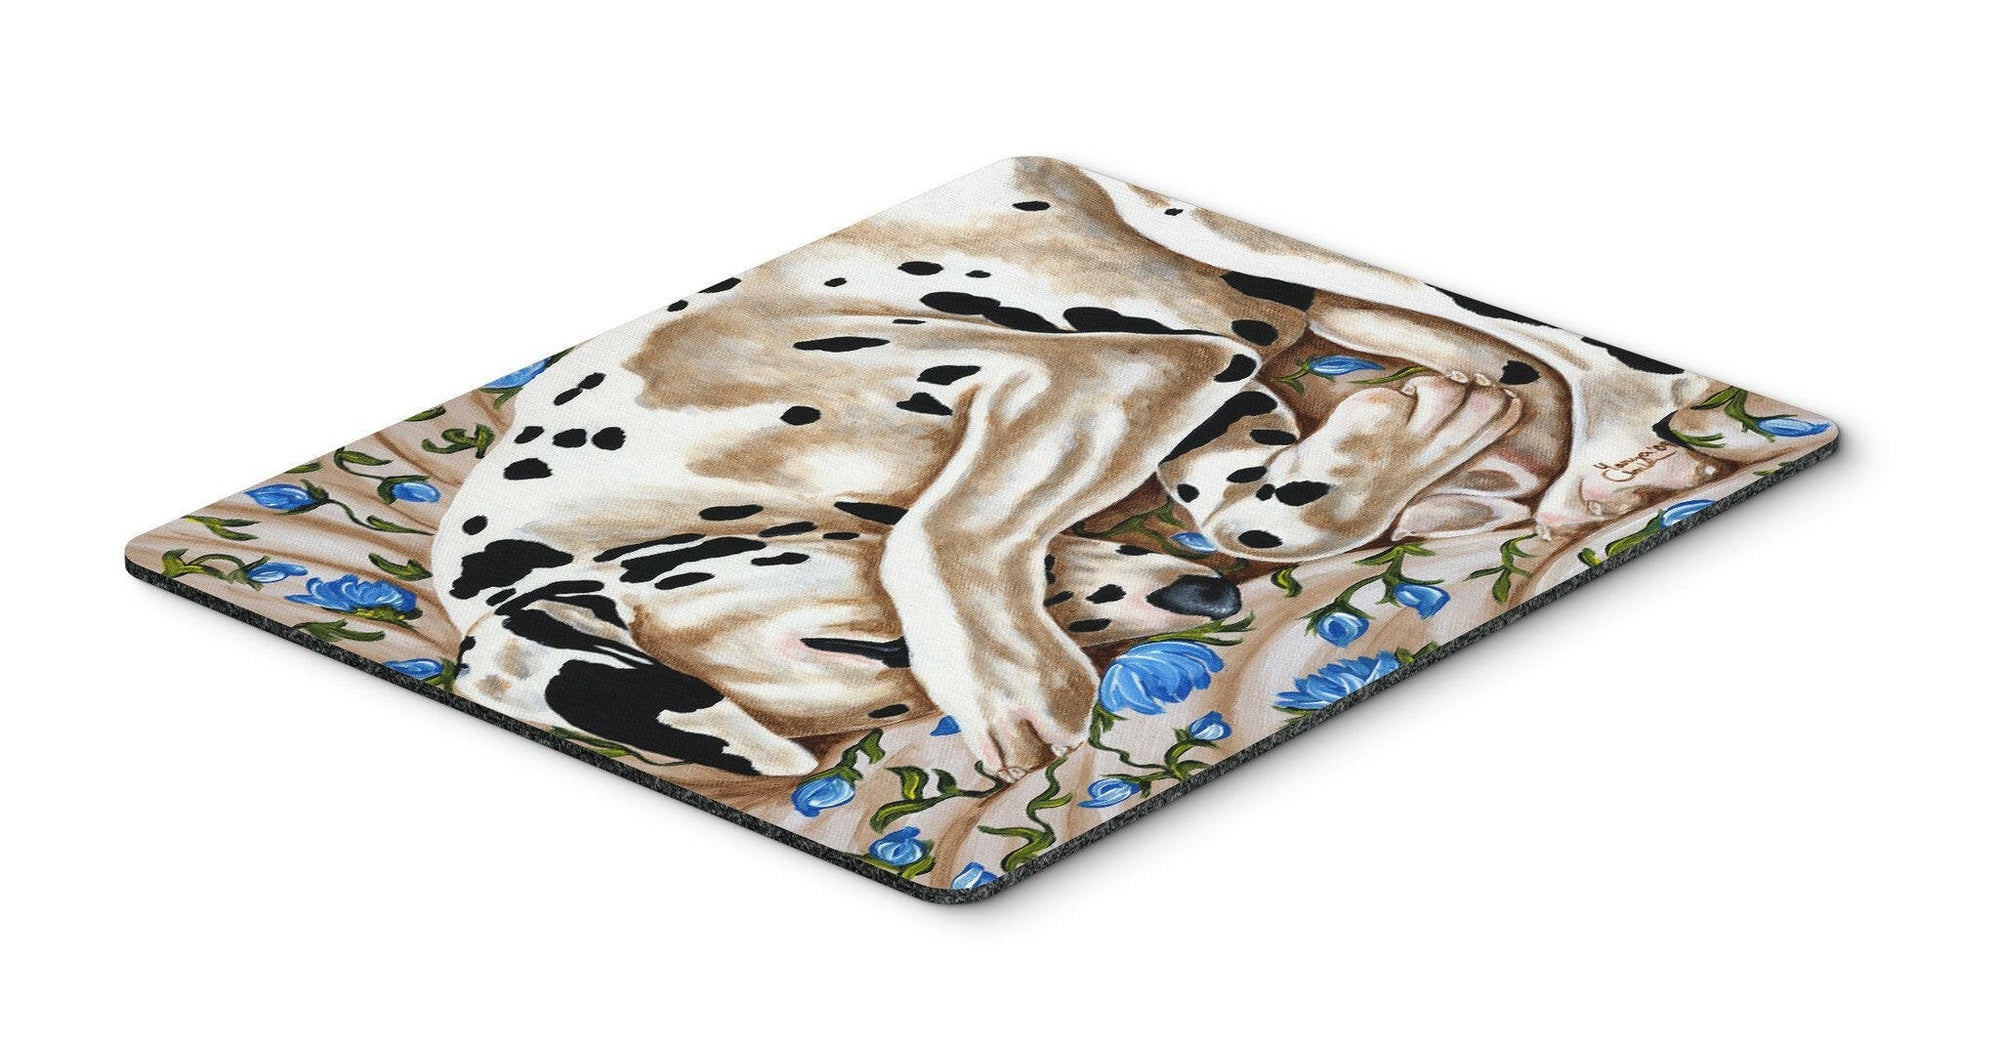 Bed of Roses Dalmatian Mouse Pad, Hot Pad or Trivet AMB1407MP by Caroline's Treasures